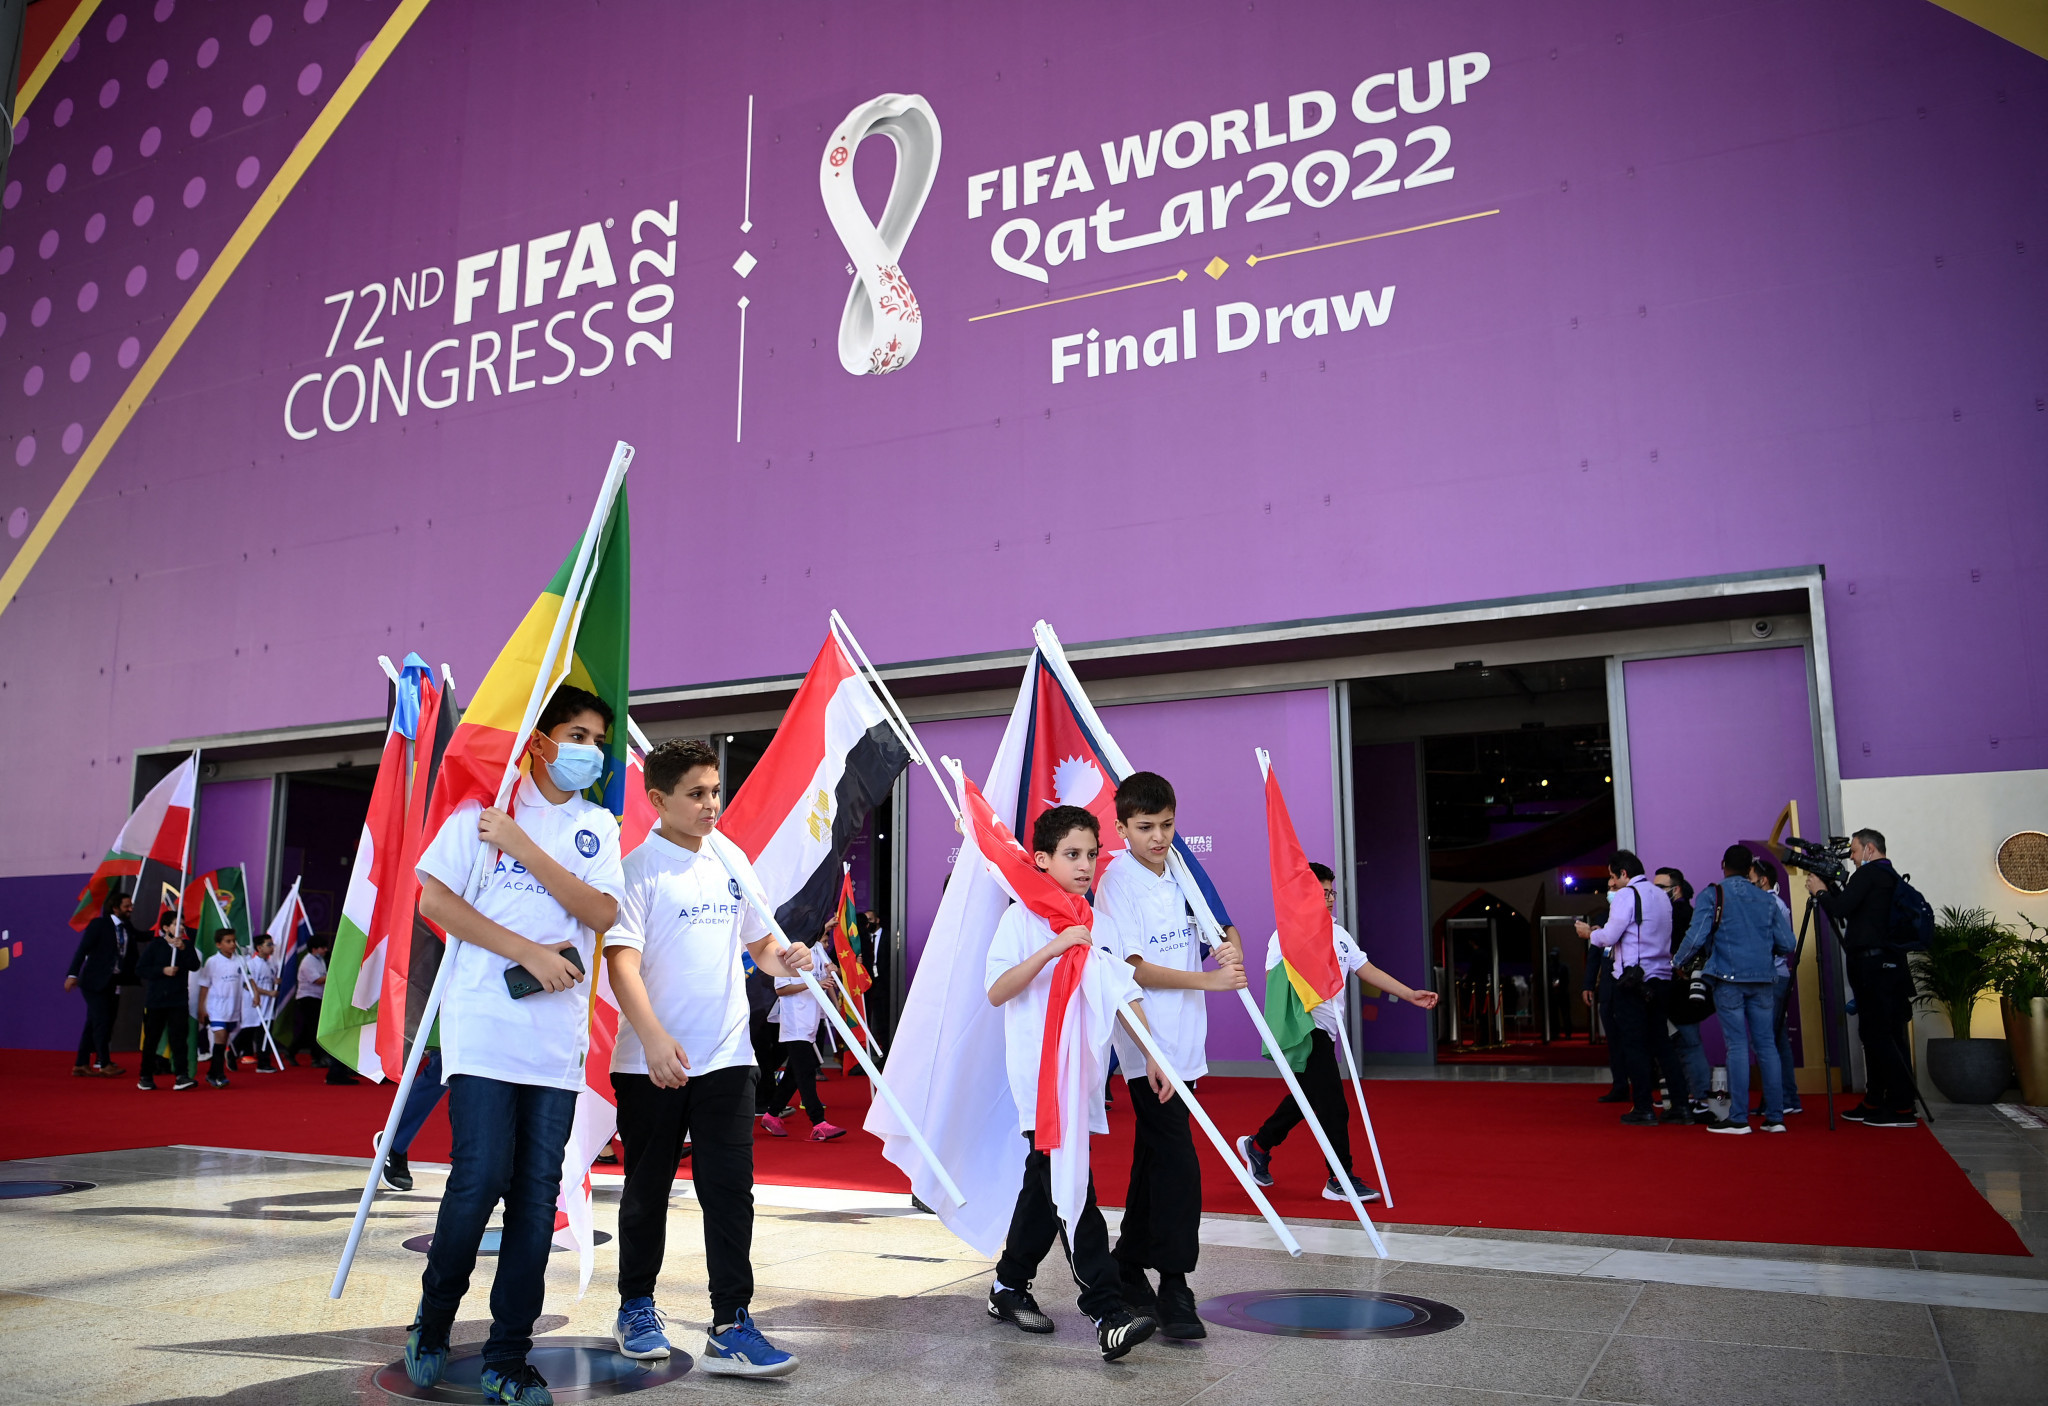 Final Draw | FIFA World Cup Qatar 2022 - YouTube